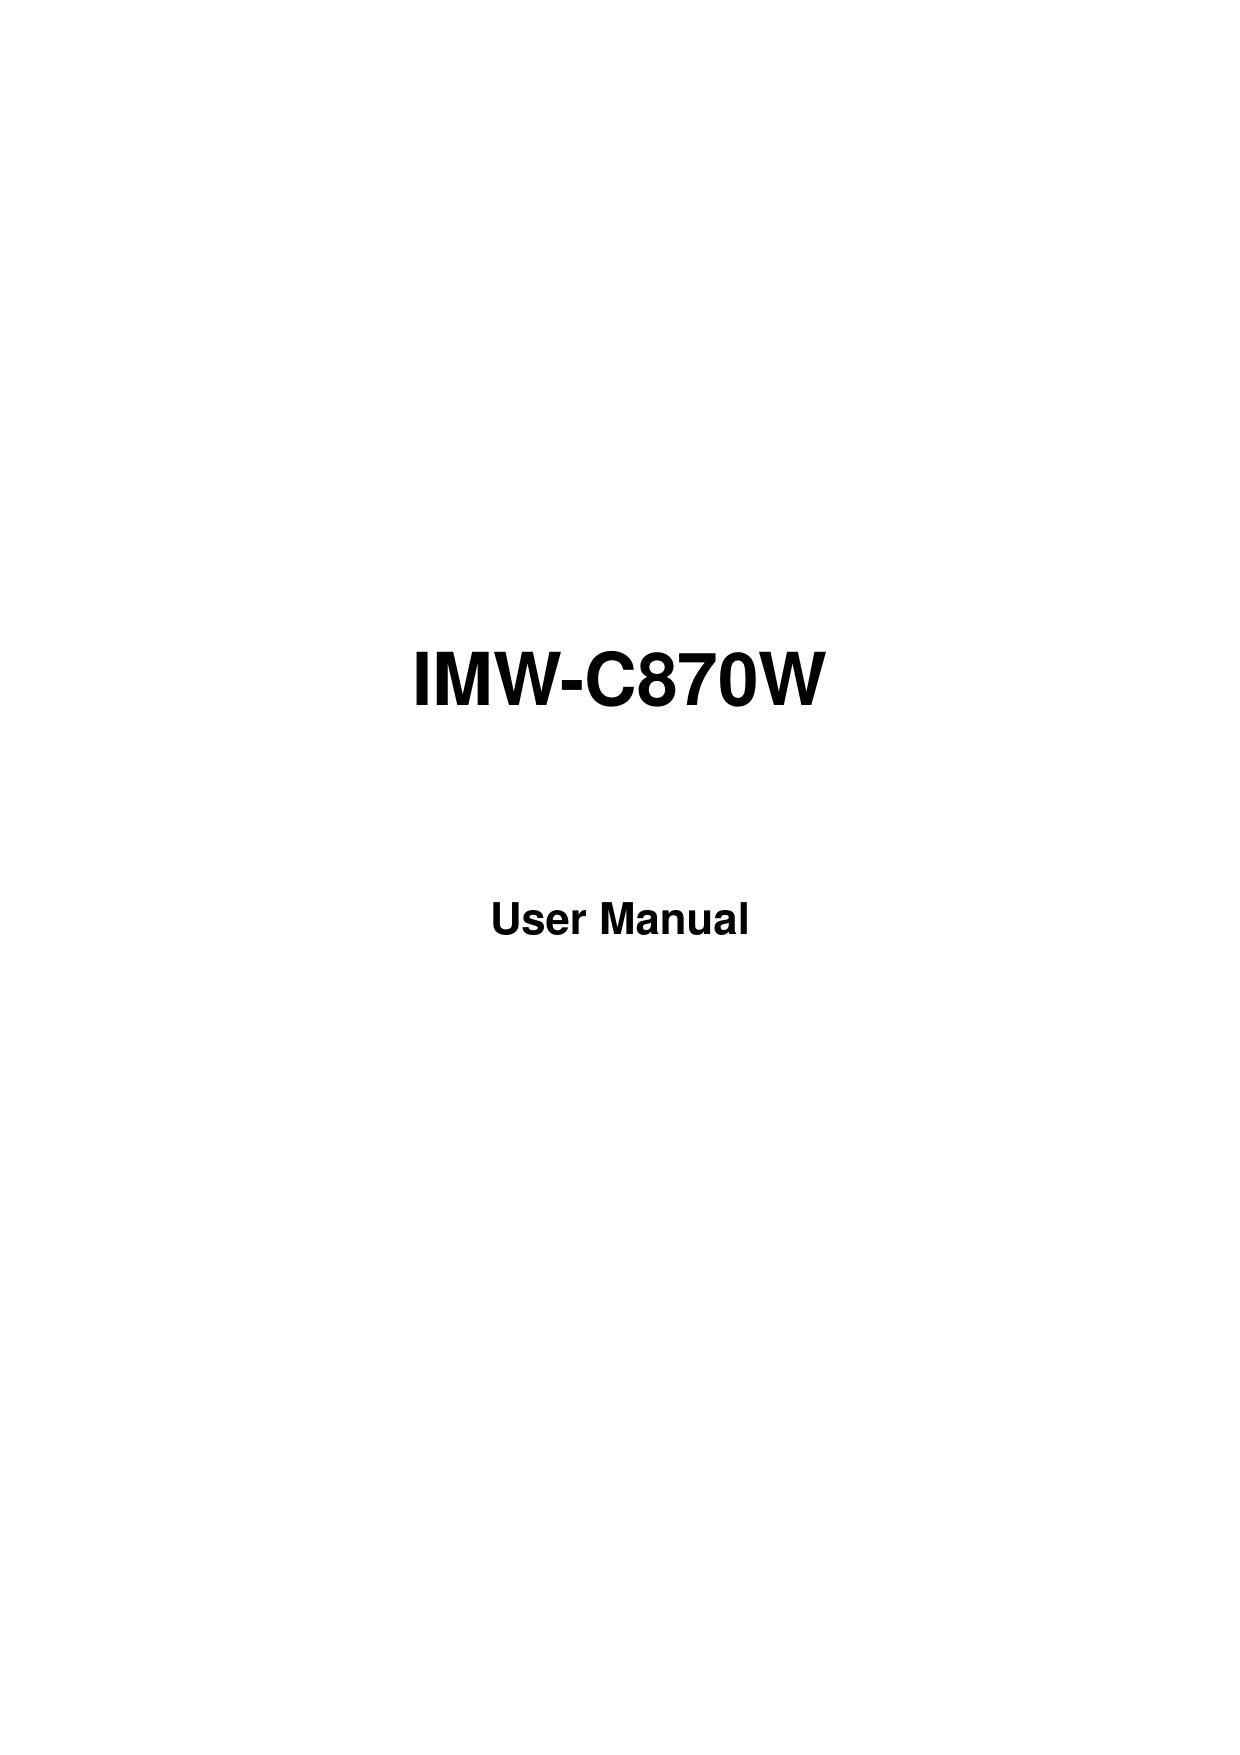     IMW-C870W      User Manual 